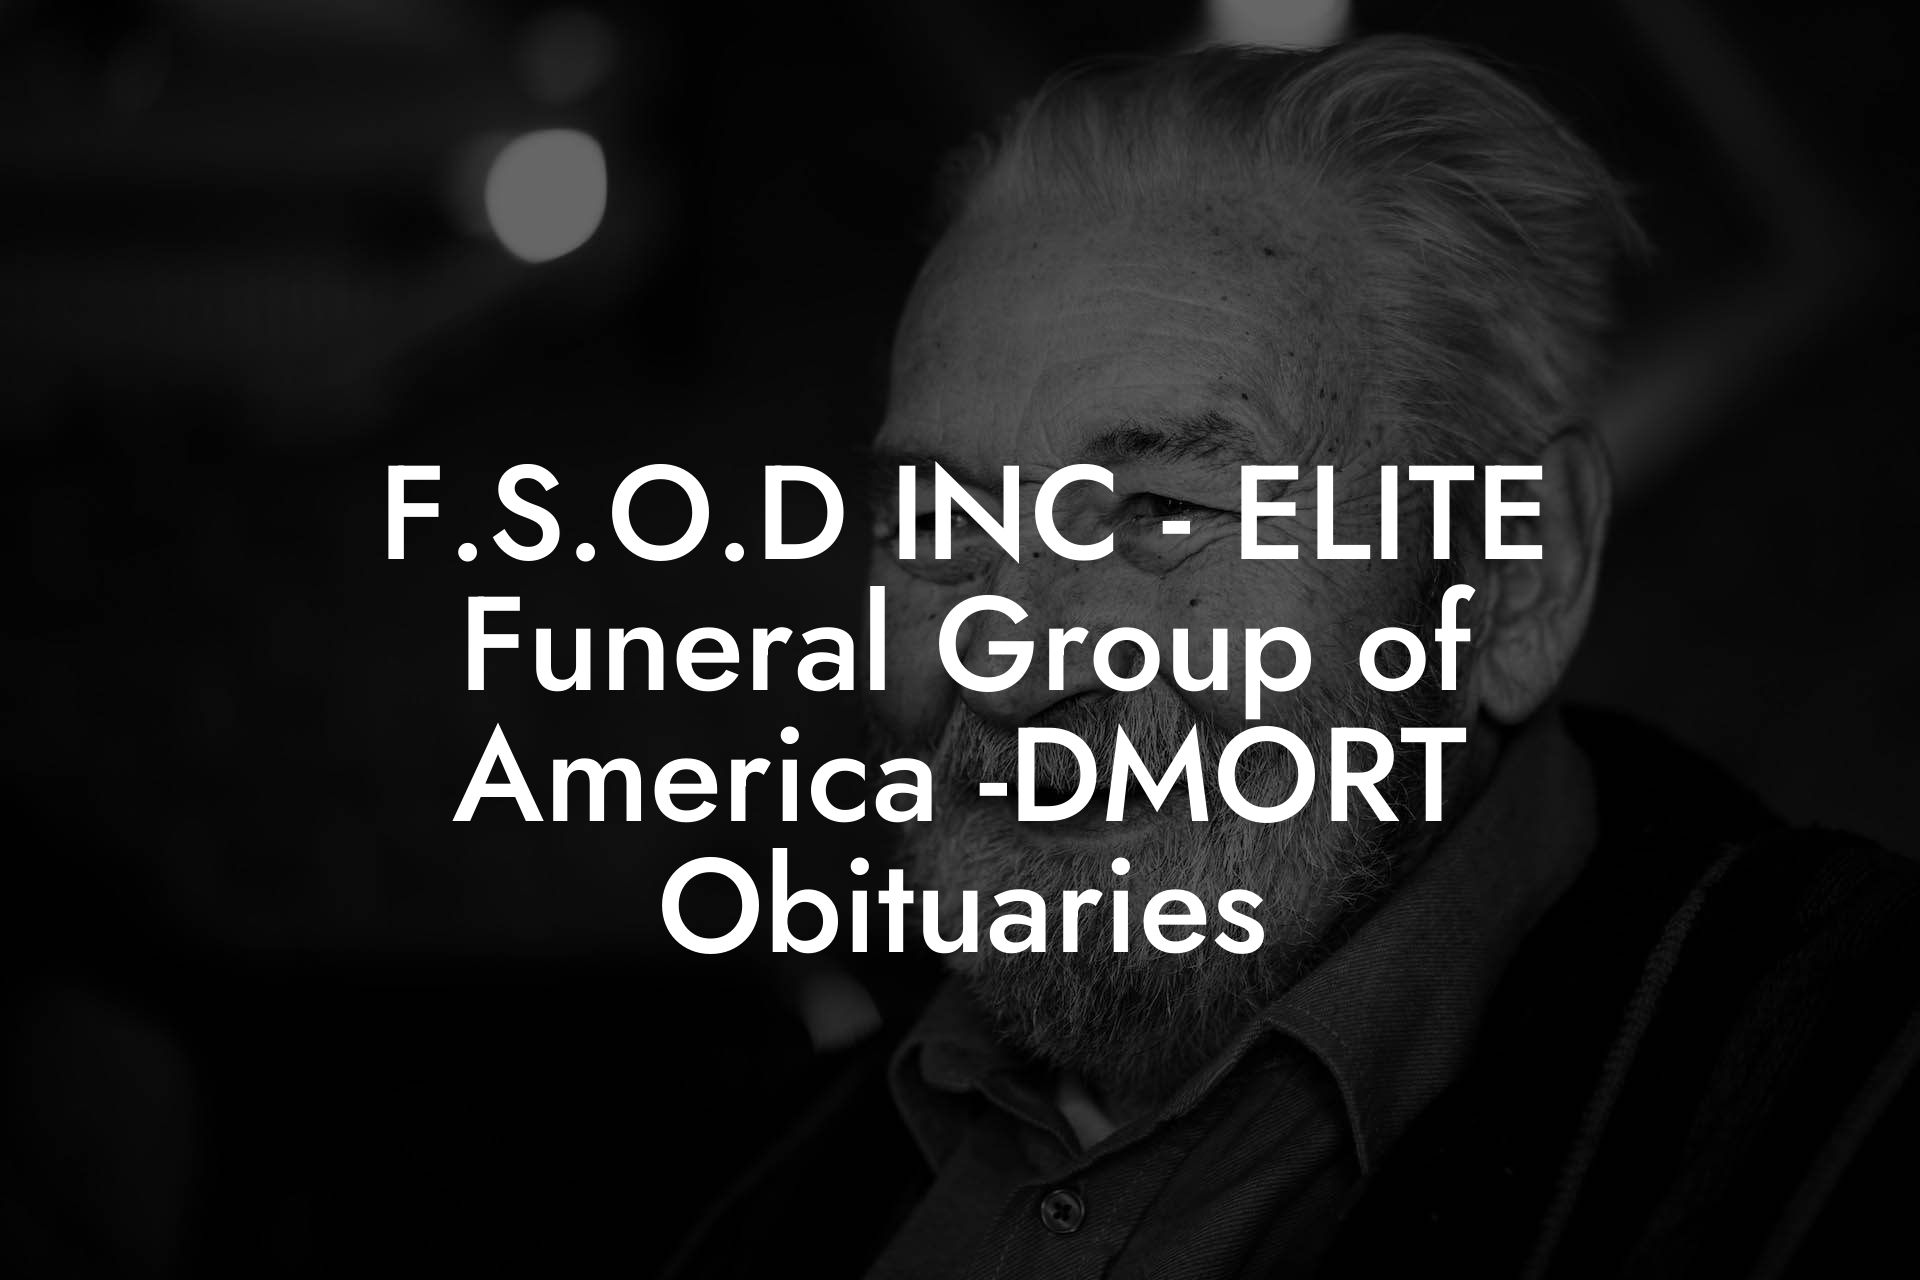 F.S.O.D INC - ELITE Funeral Group Of America - DMORT Obituaries